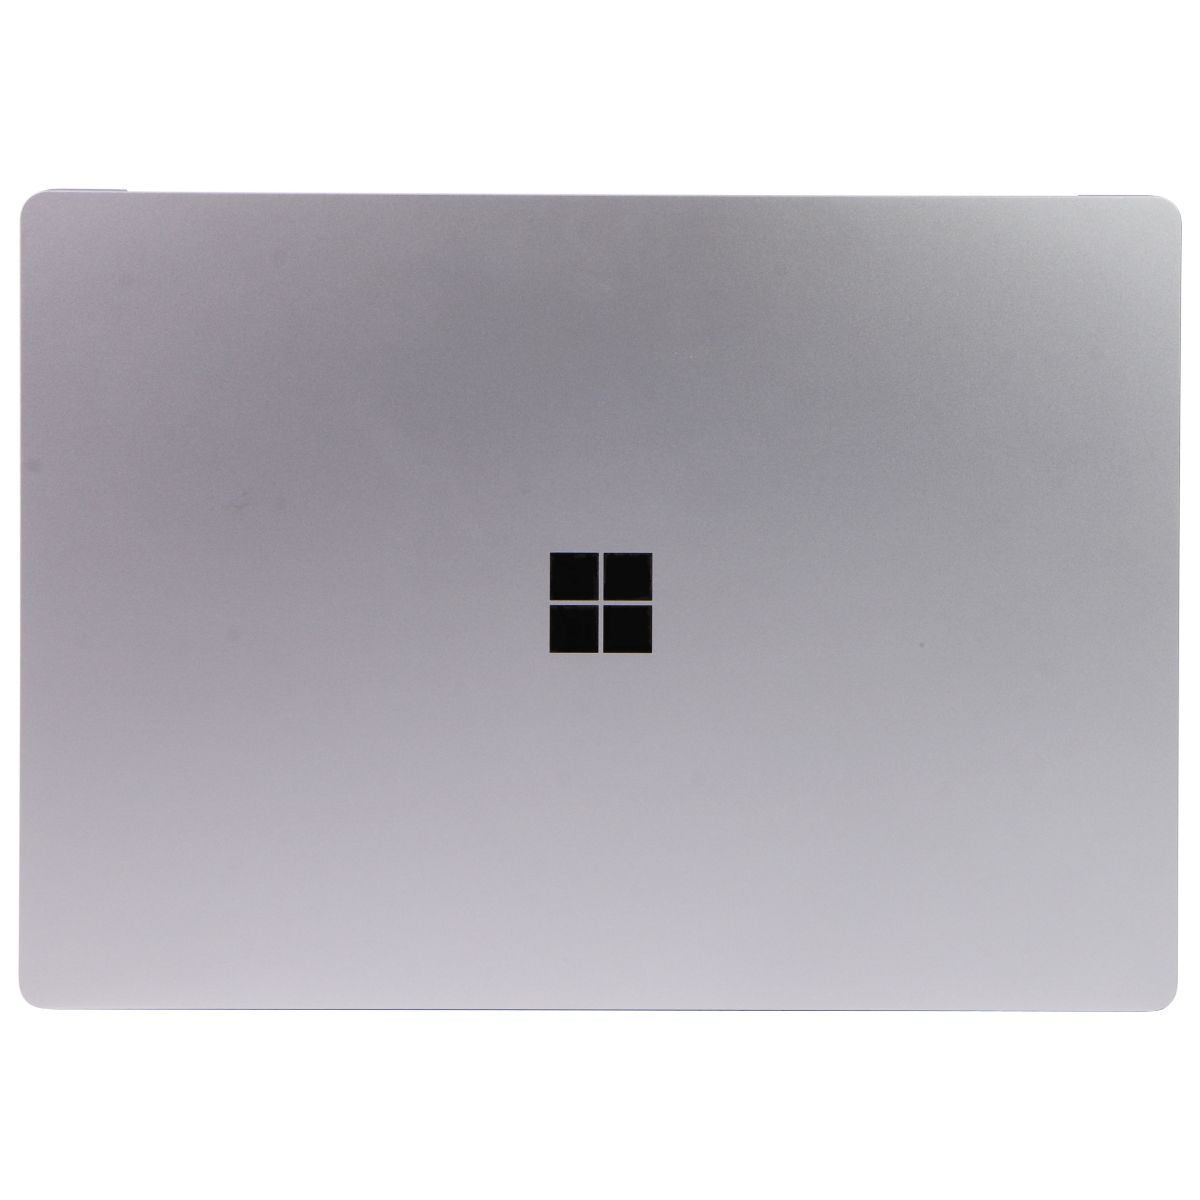 Microsoft Surface Laptop 3 (15-in), AMD Ryzen 5,RX Vega 9,8GB,128GB - Platinum Laptops - PC Laptops & Netbooks Microsoft    - Simple Cell Bulk Wholesale Pricing - USA Seller